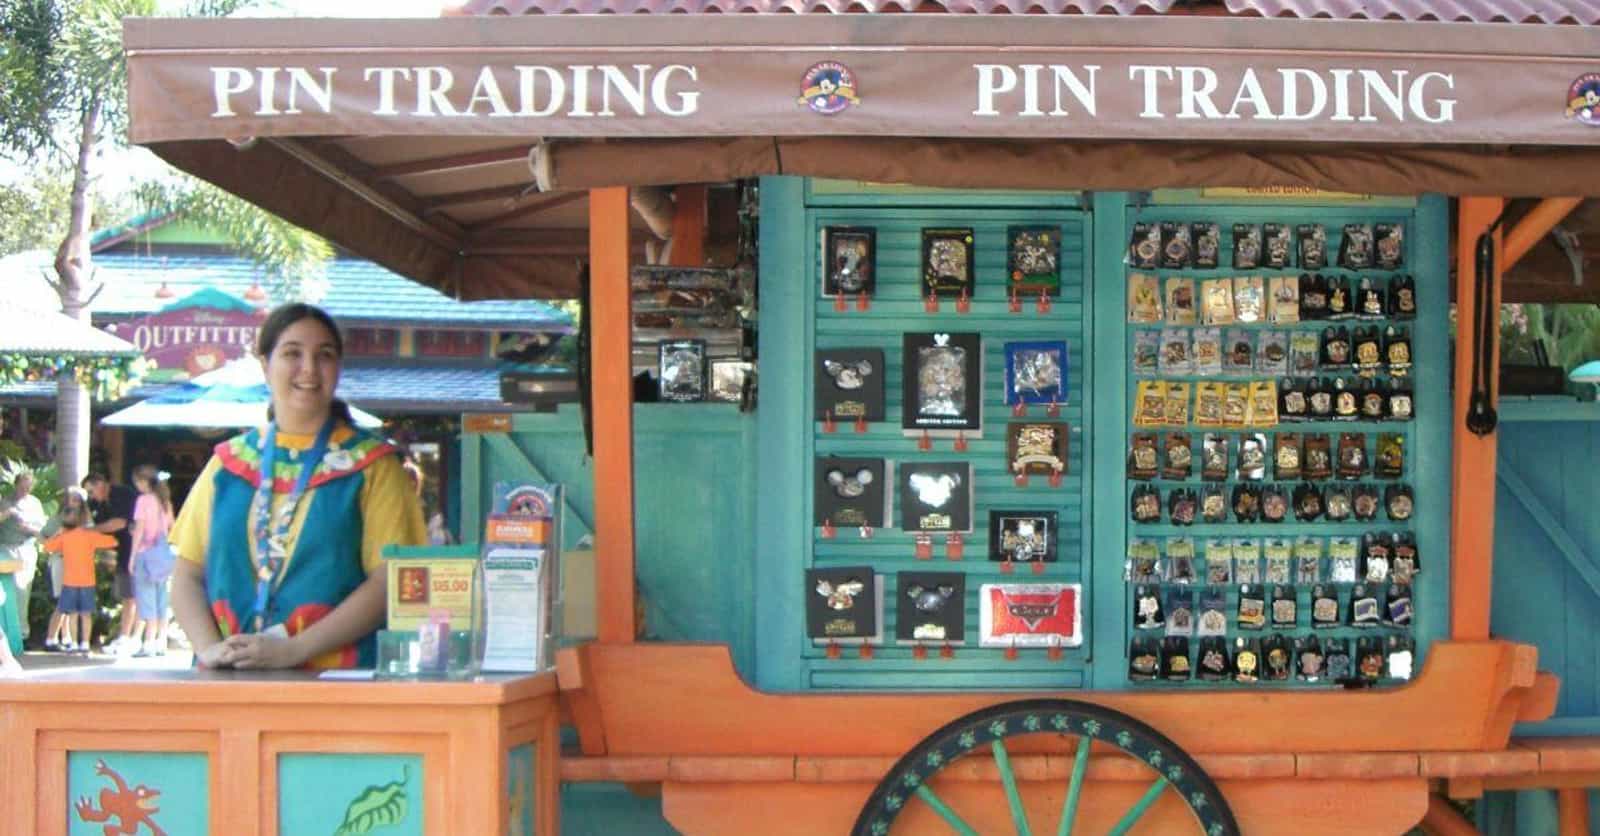 Inside The Insane World Of Disney Pin Trading